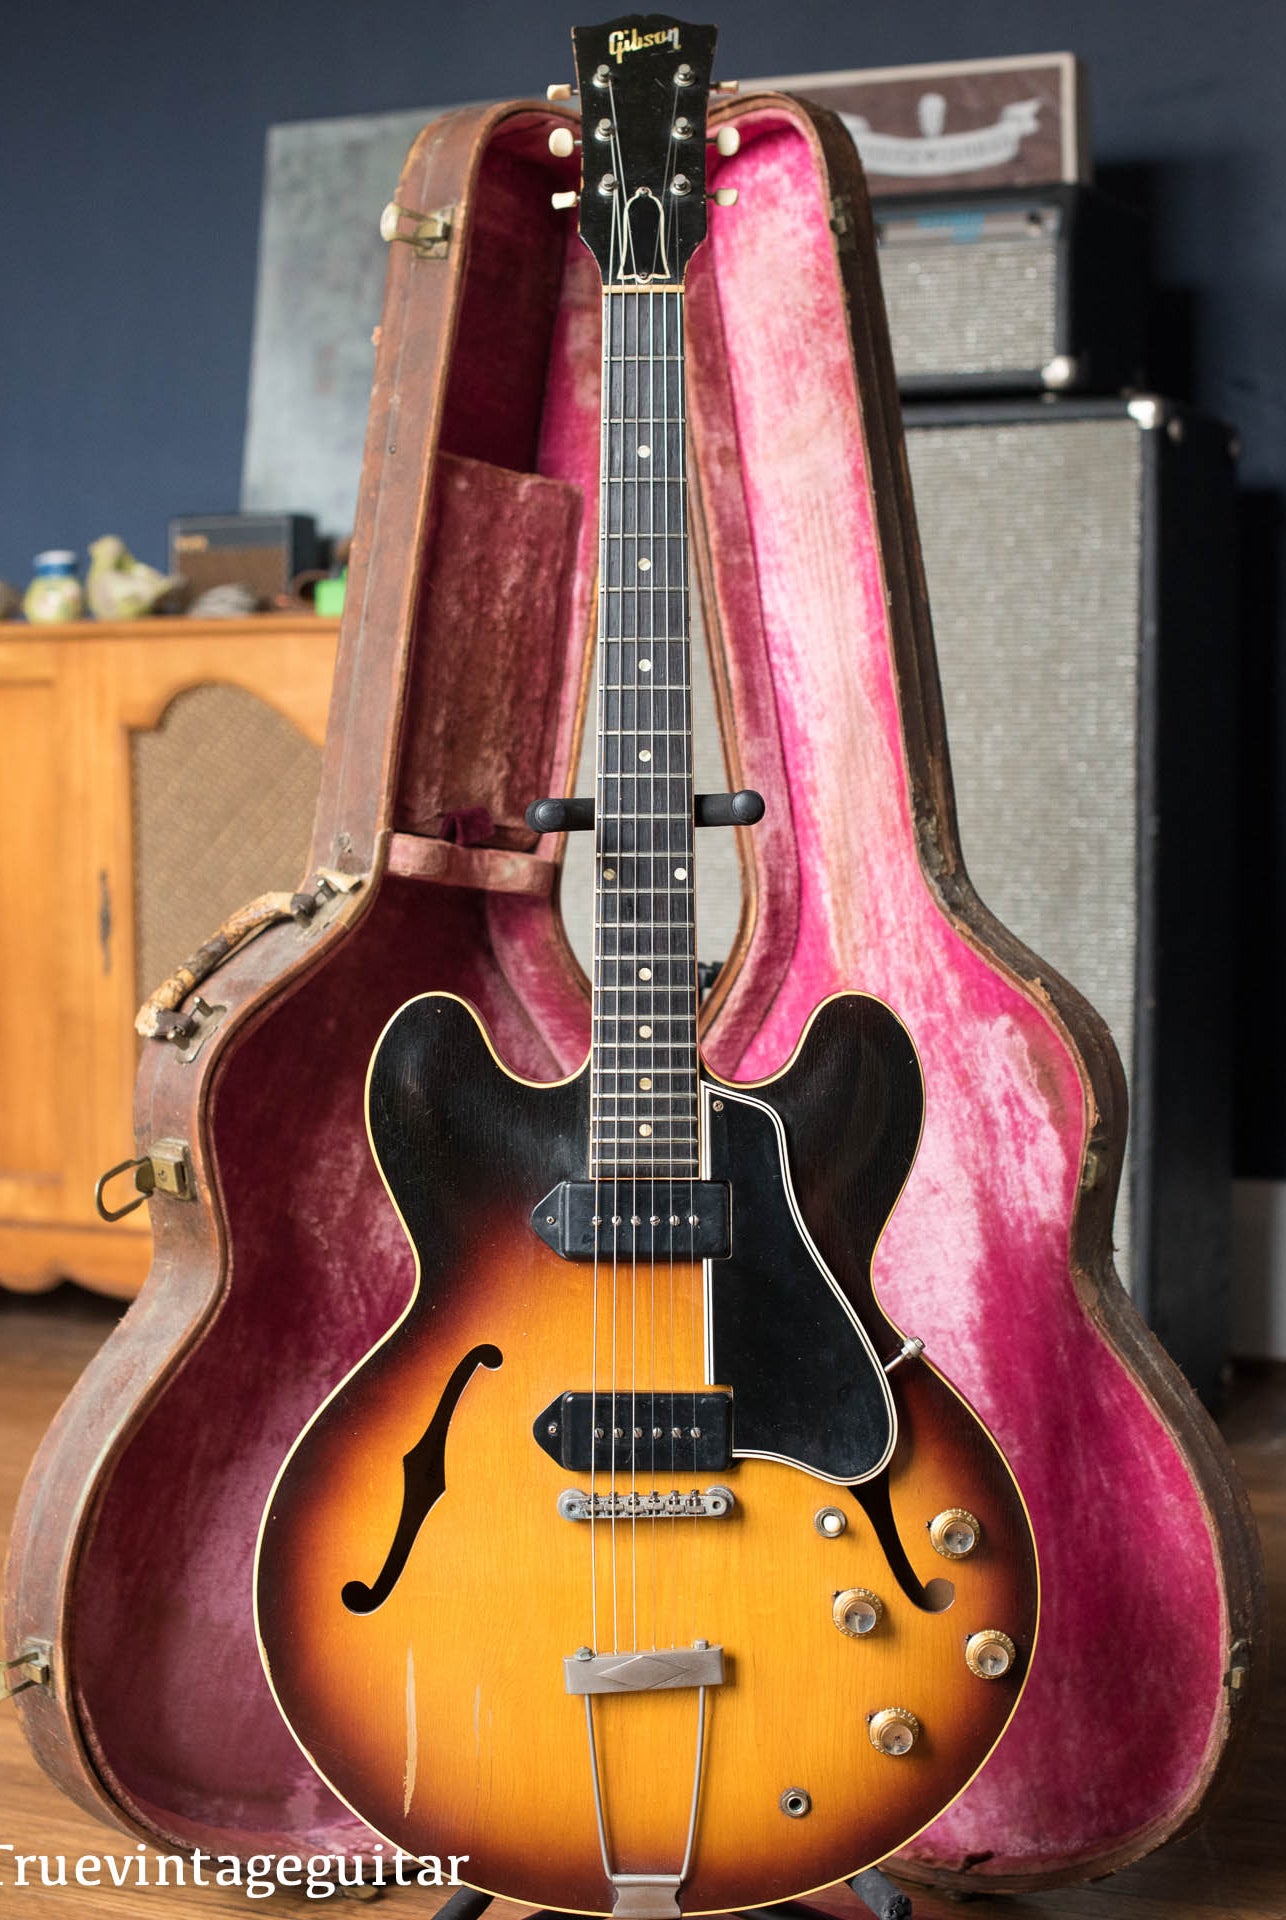 Vintage 1961 Gibson ES-330 electric guitar